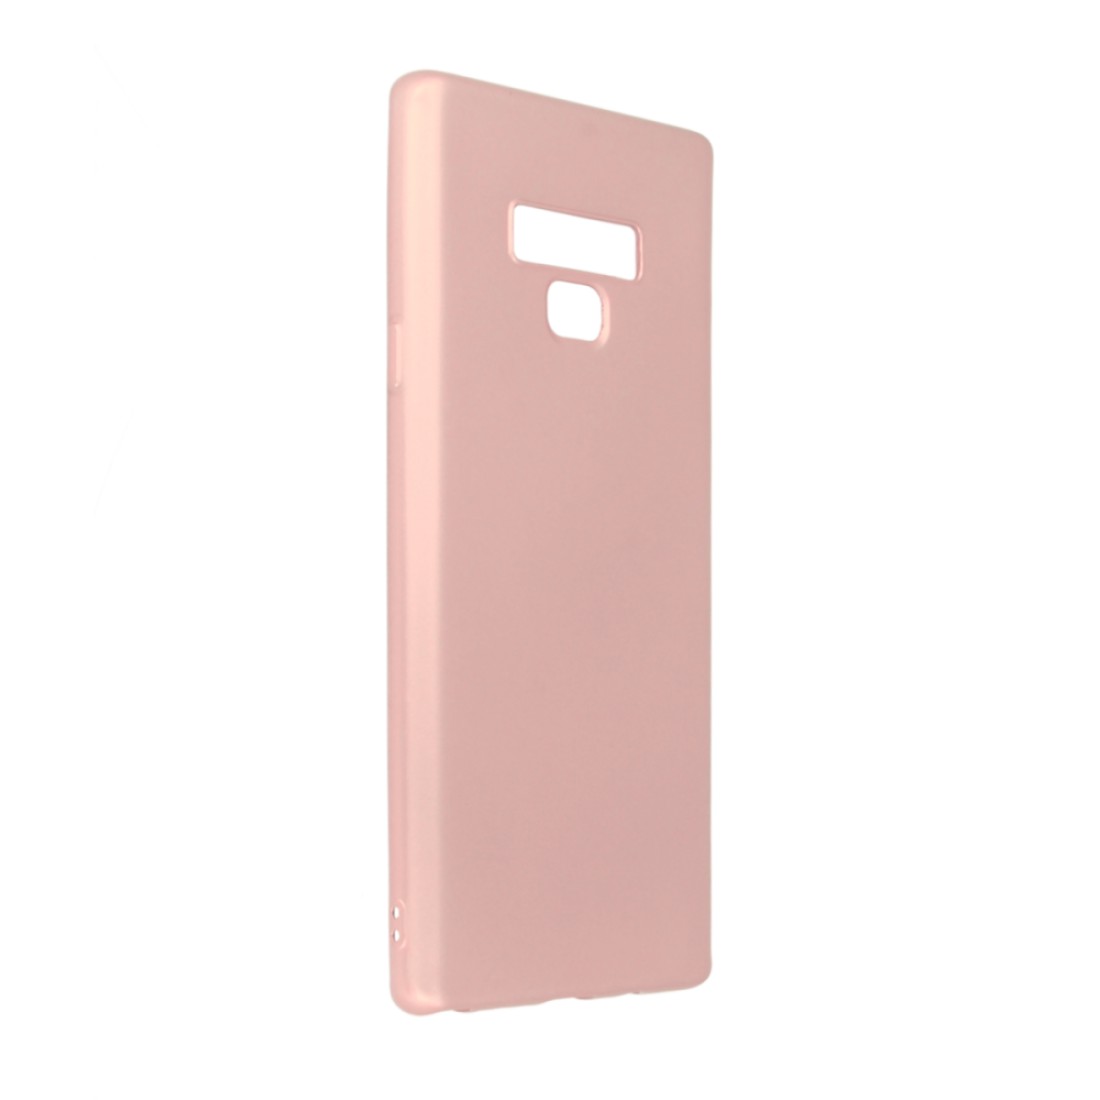 Samsung Galaxy Note 9 Kılıf Premium Rubber Silikon - Rose Gold